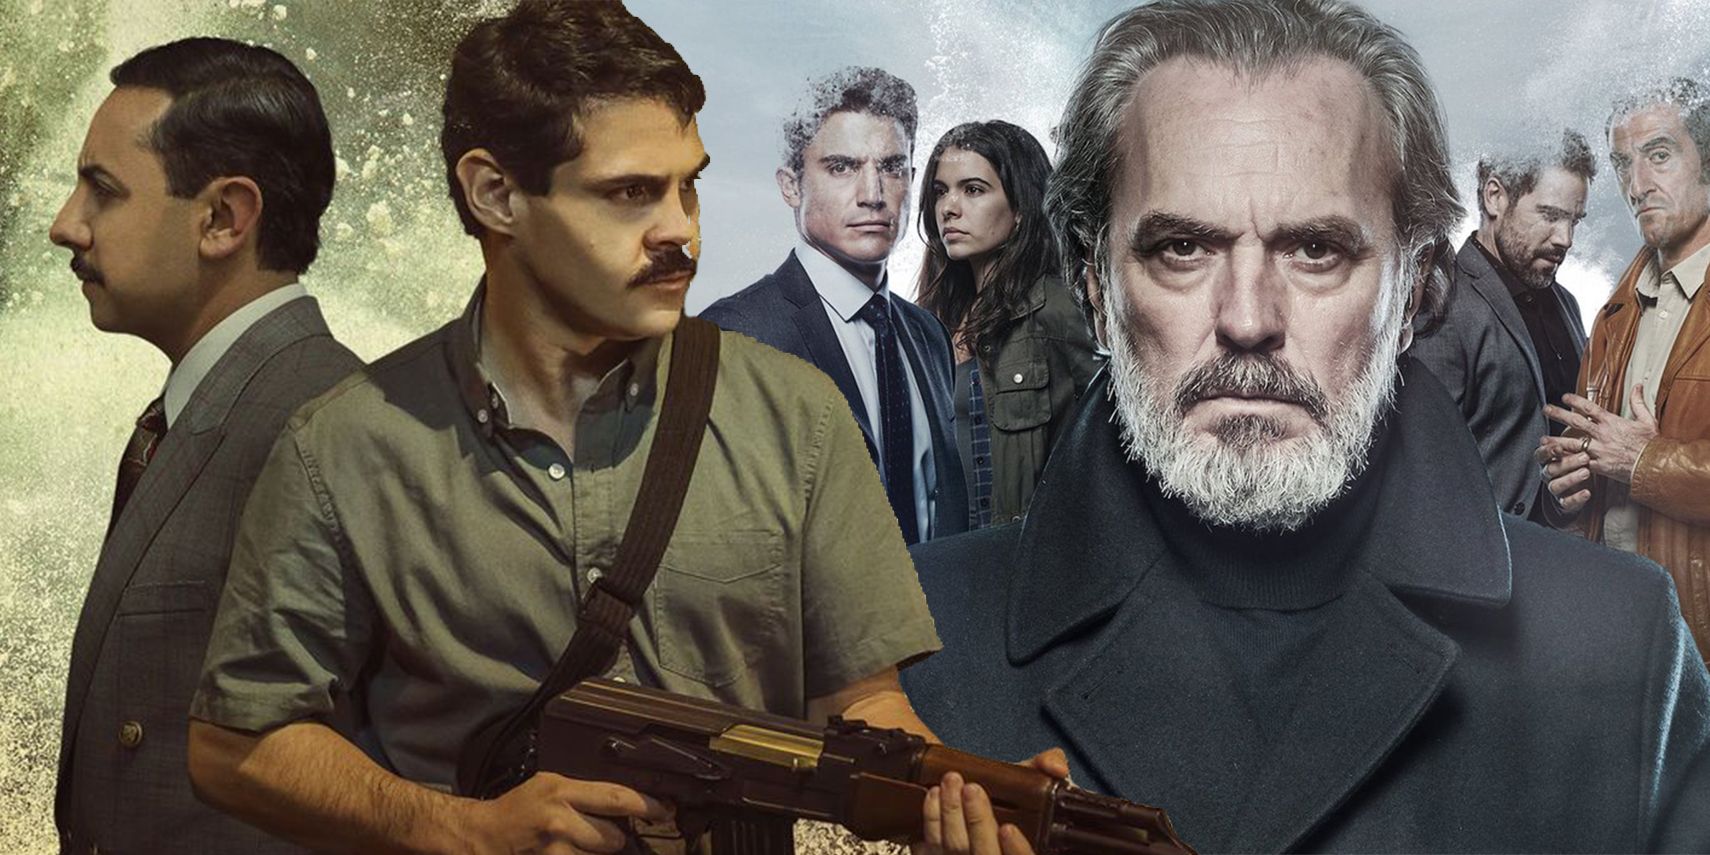 8 Spanish TV Series You Should Binge-Watch on Netflix